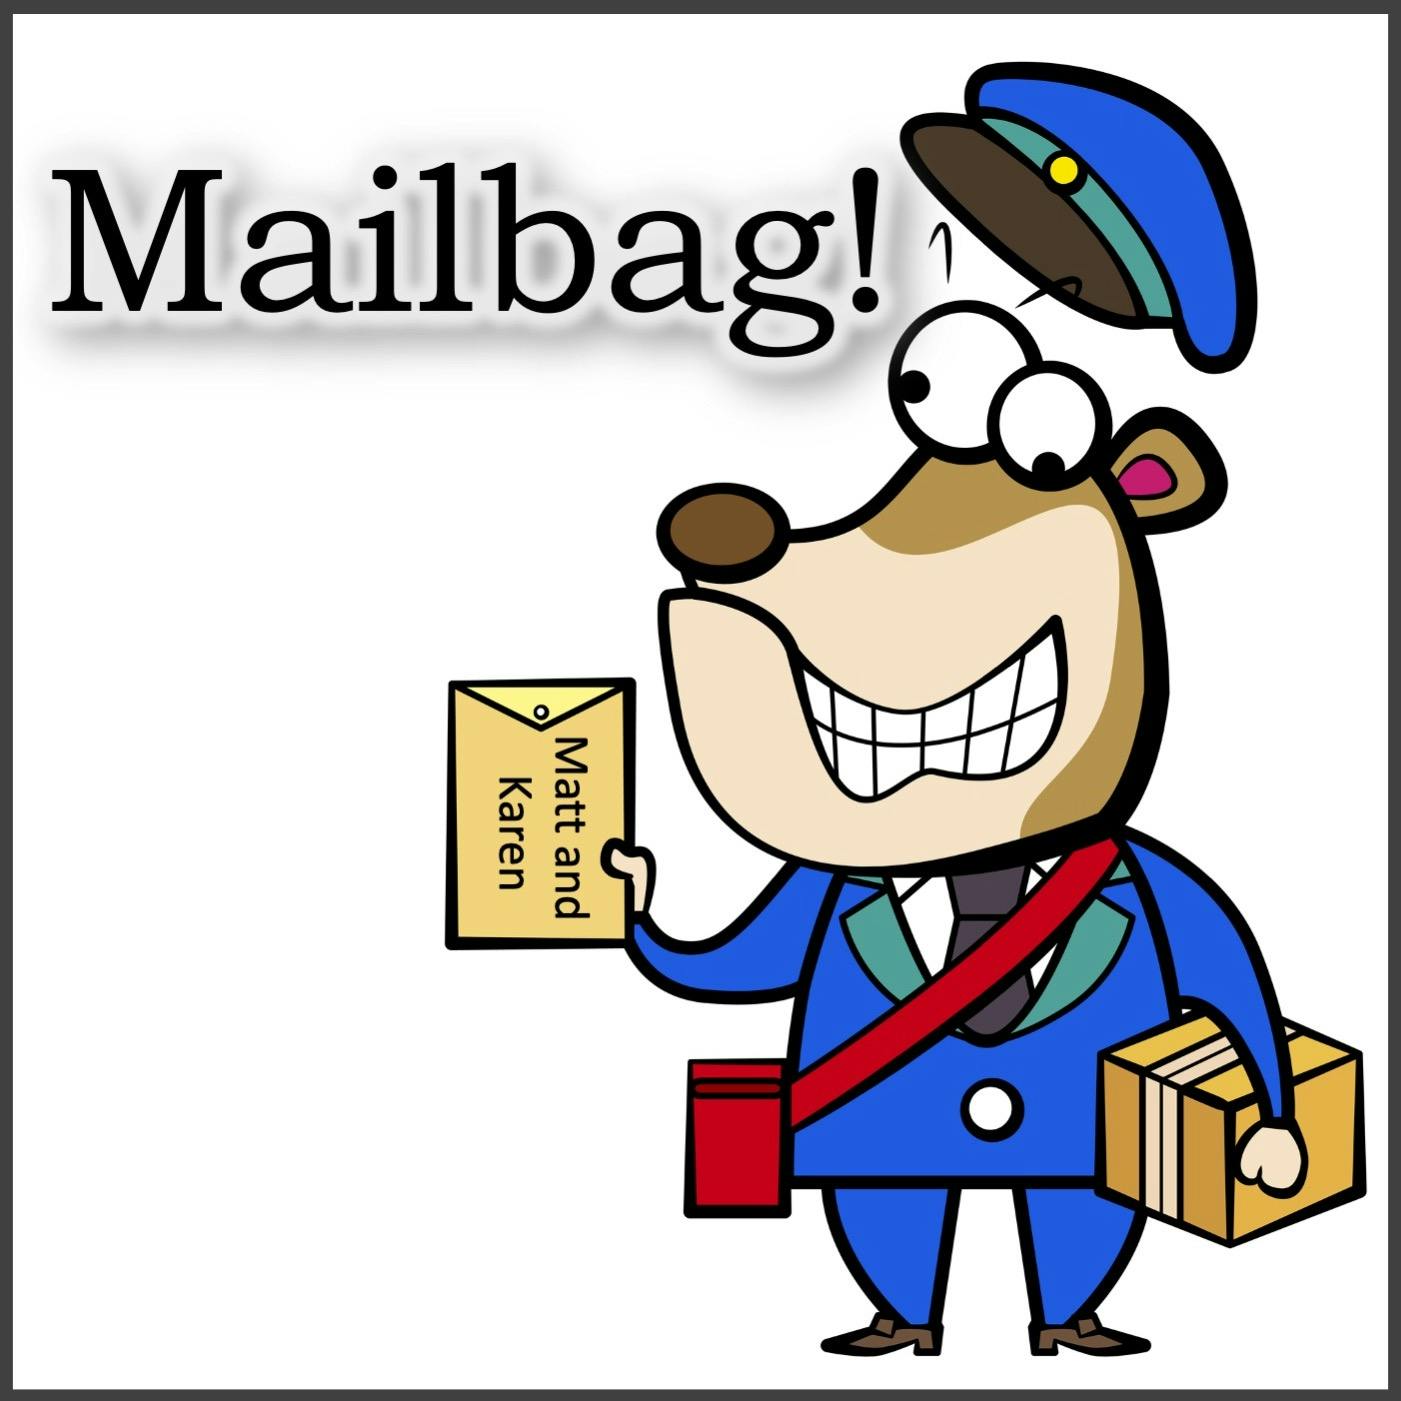 64: Mailbag! Image